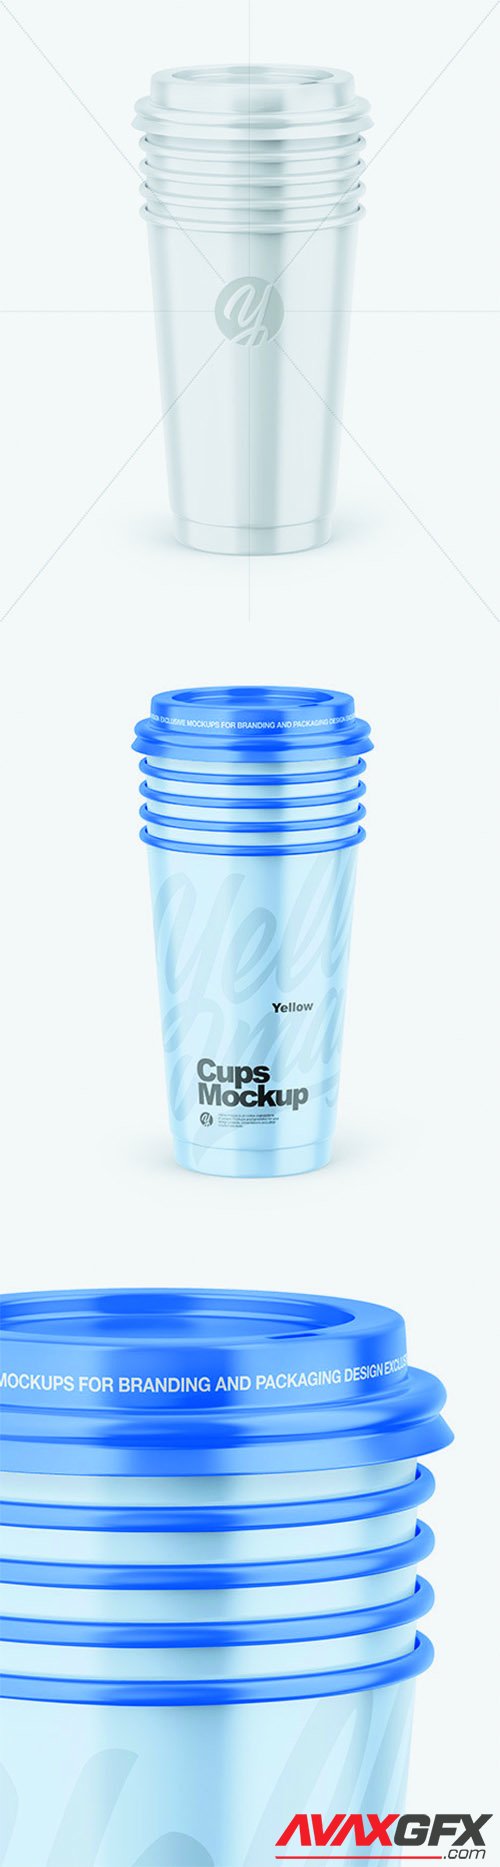 Glossy Cups Mockup 68839